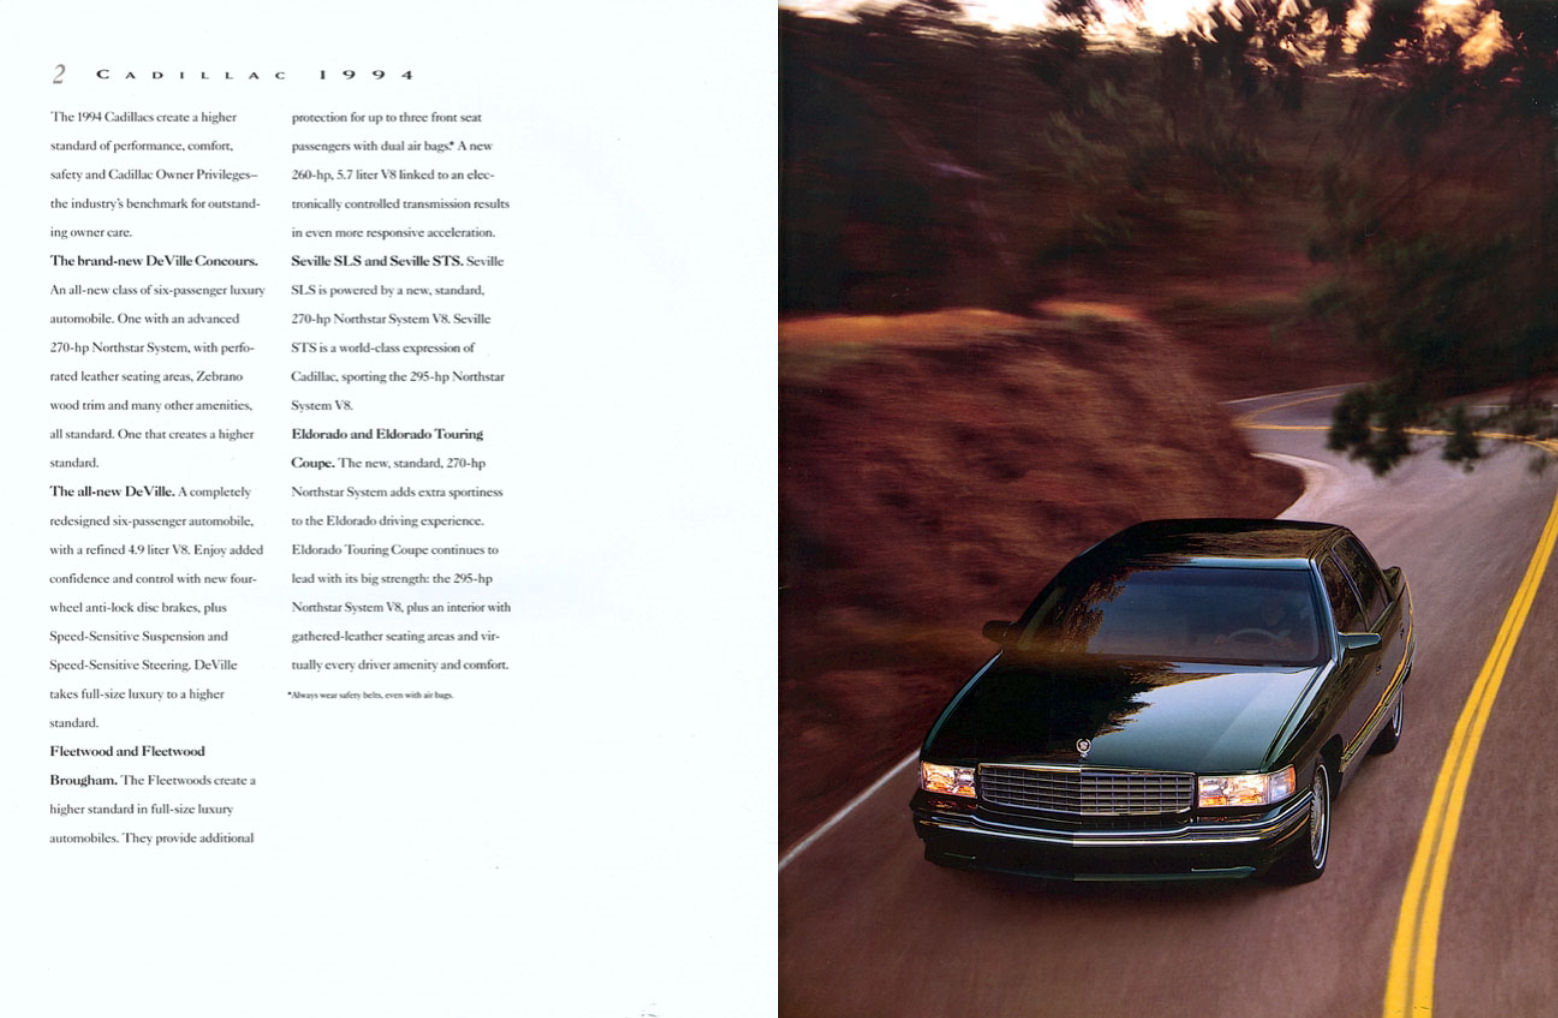 1994_Cadillac_Full_Line_Prestige-02-03